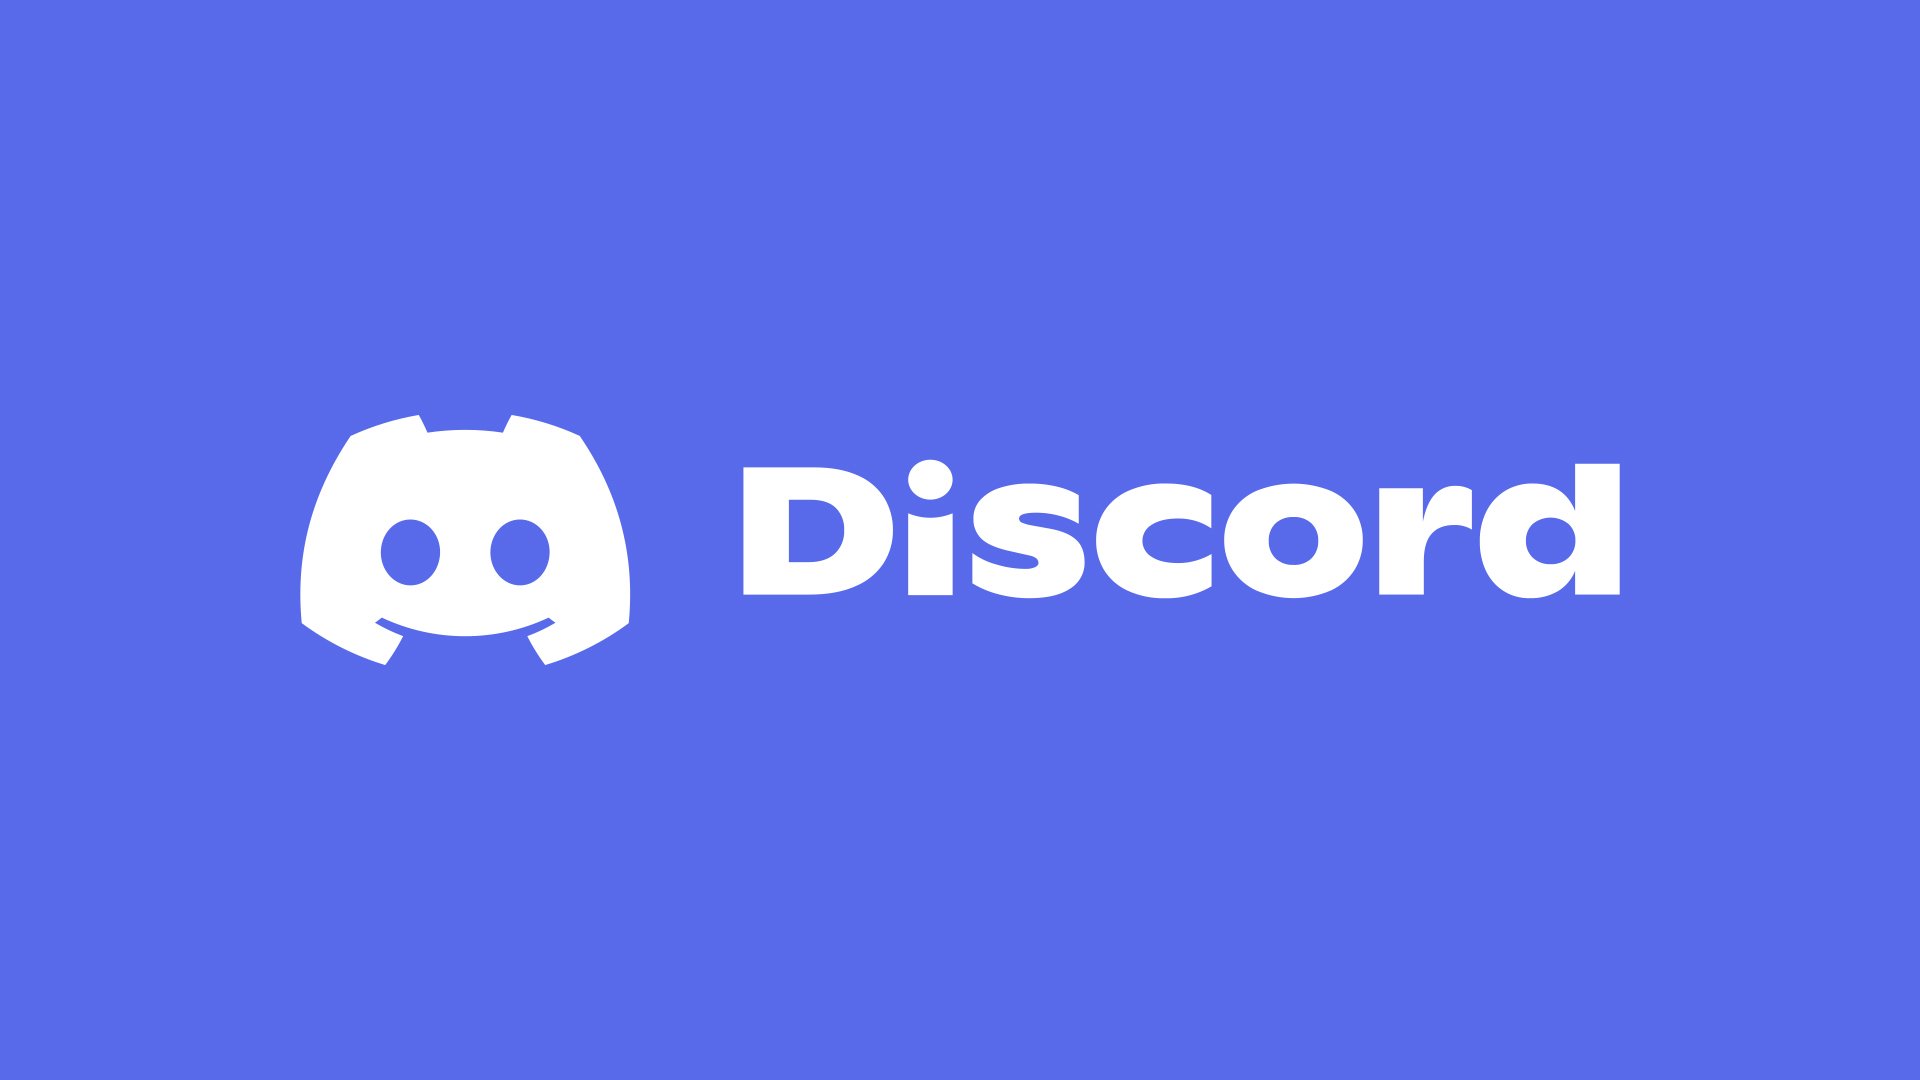 discord-new-logo